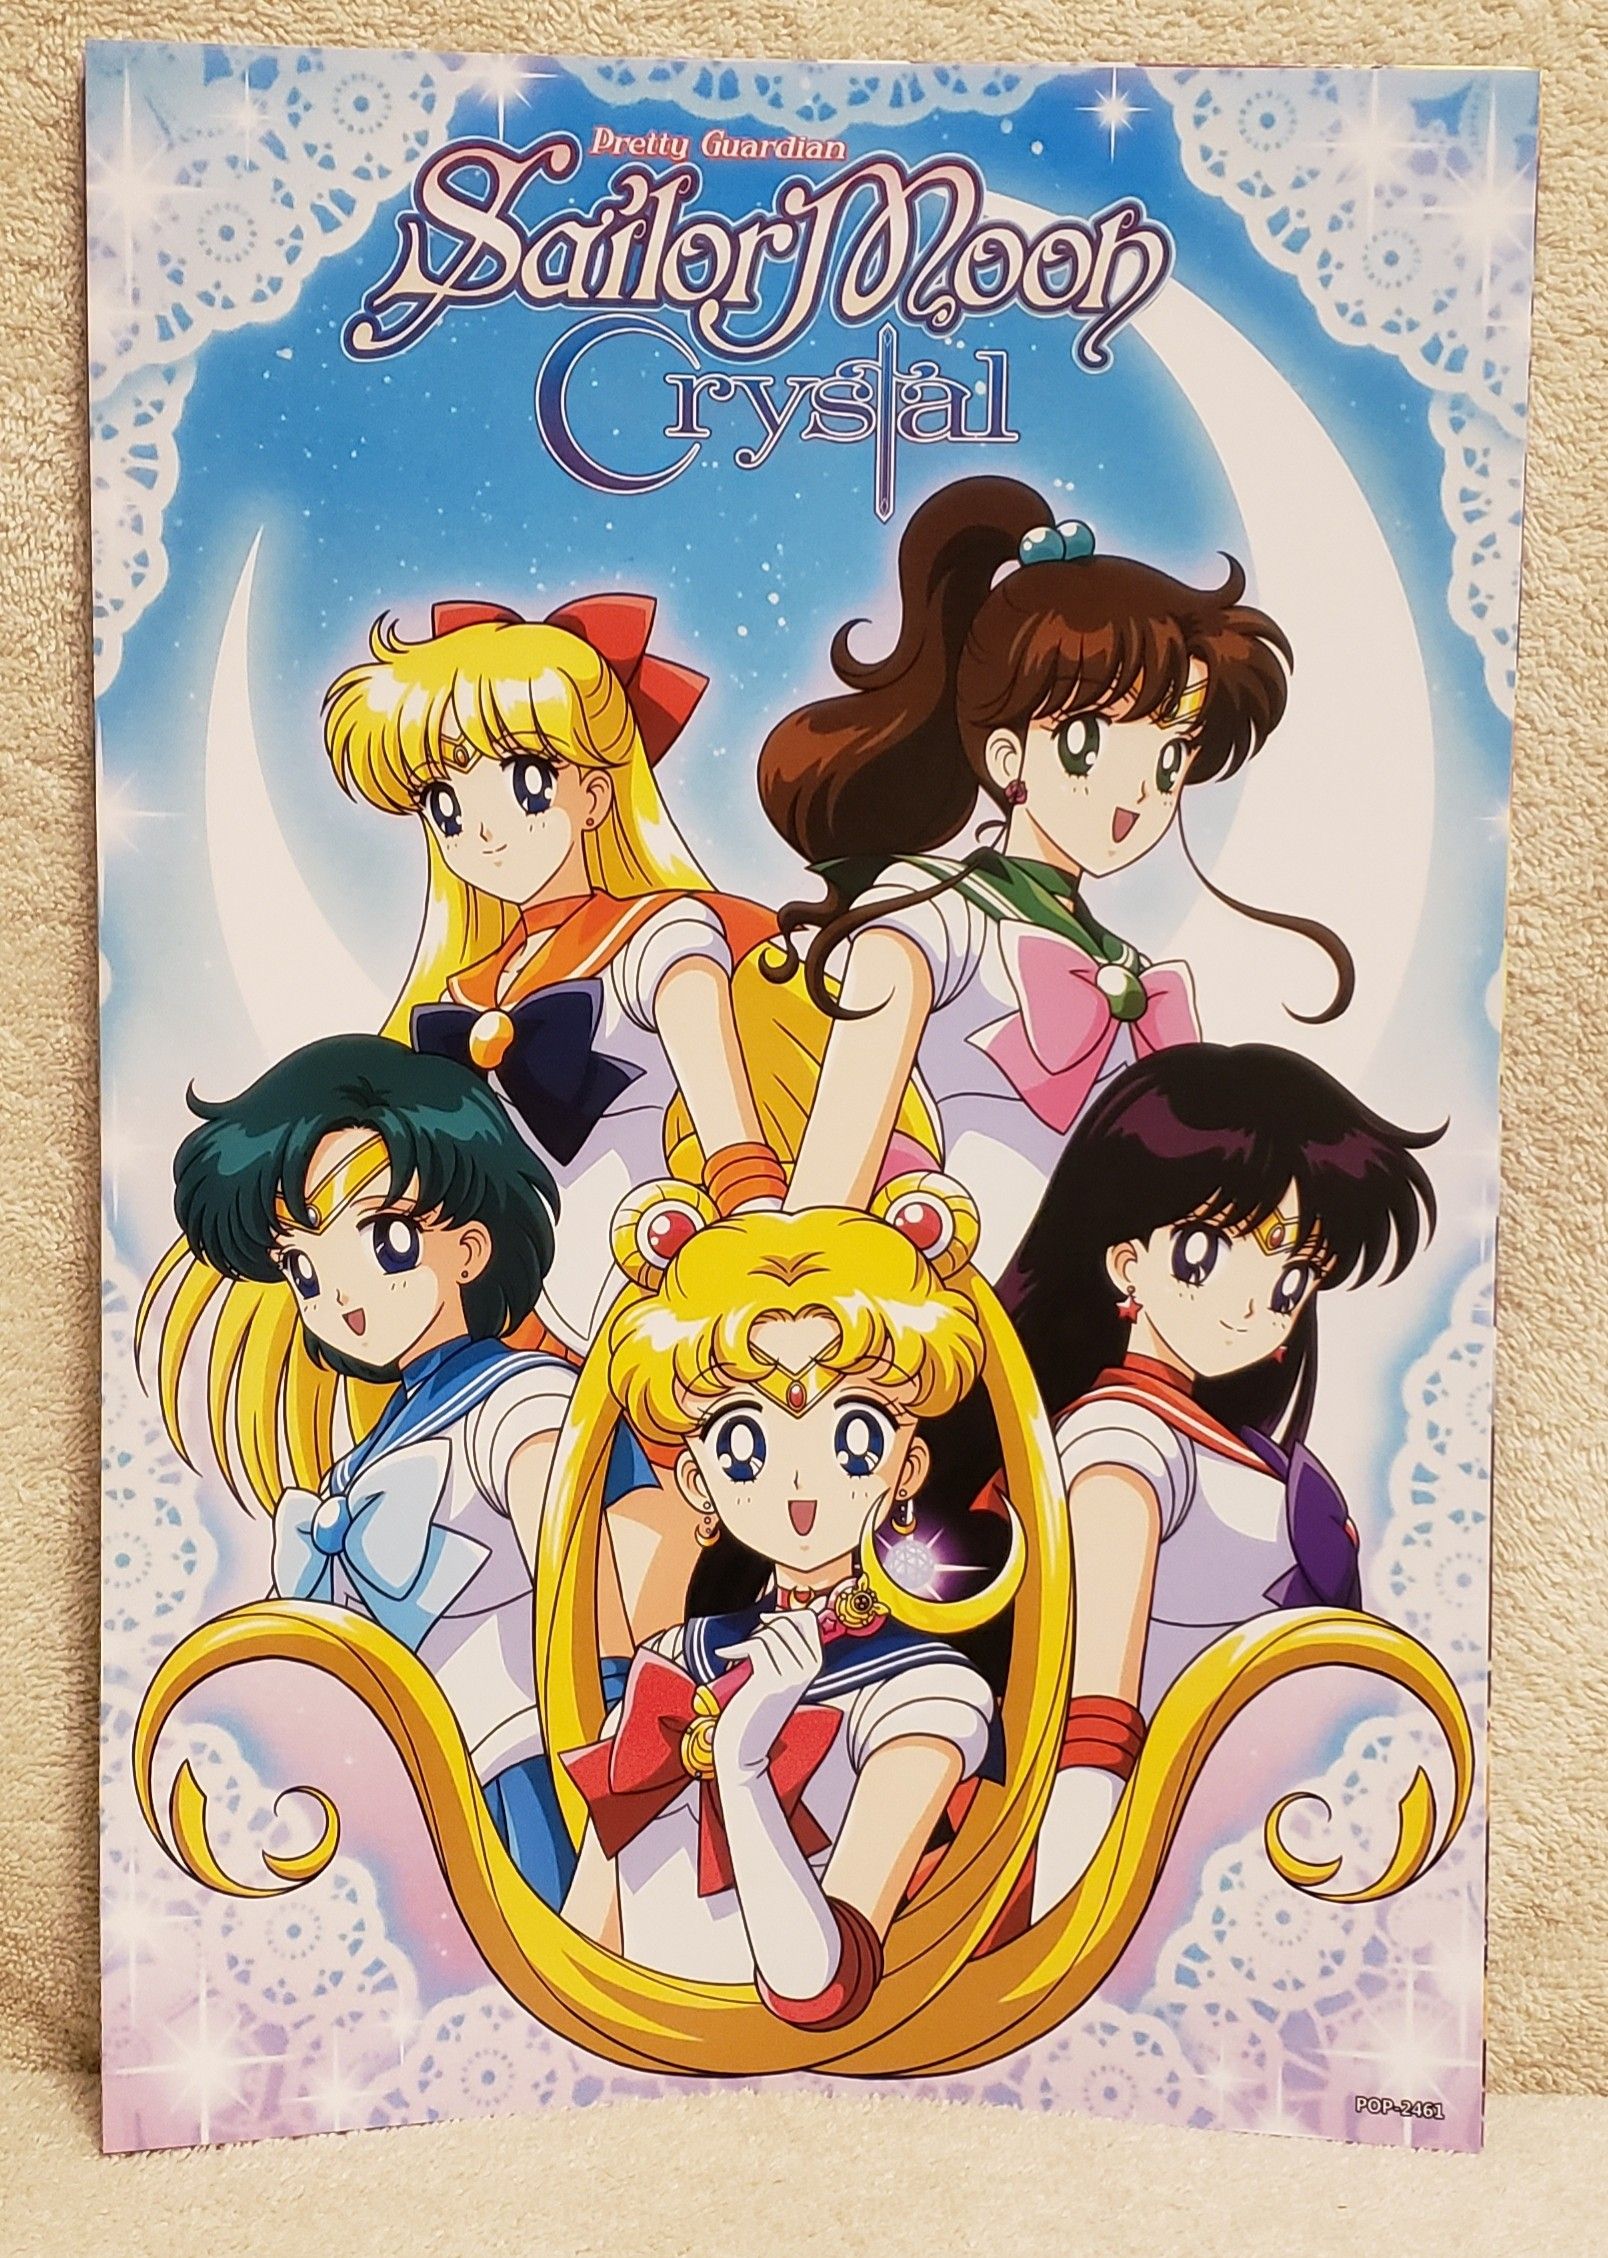 Sailor Moon anime poster